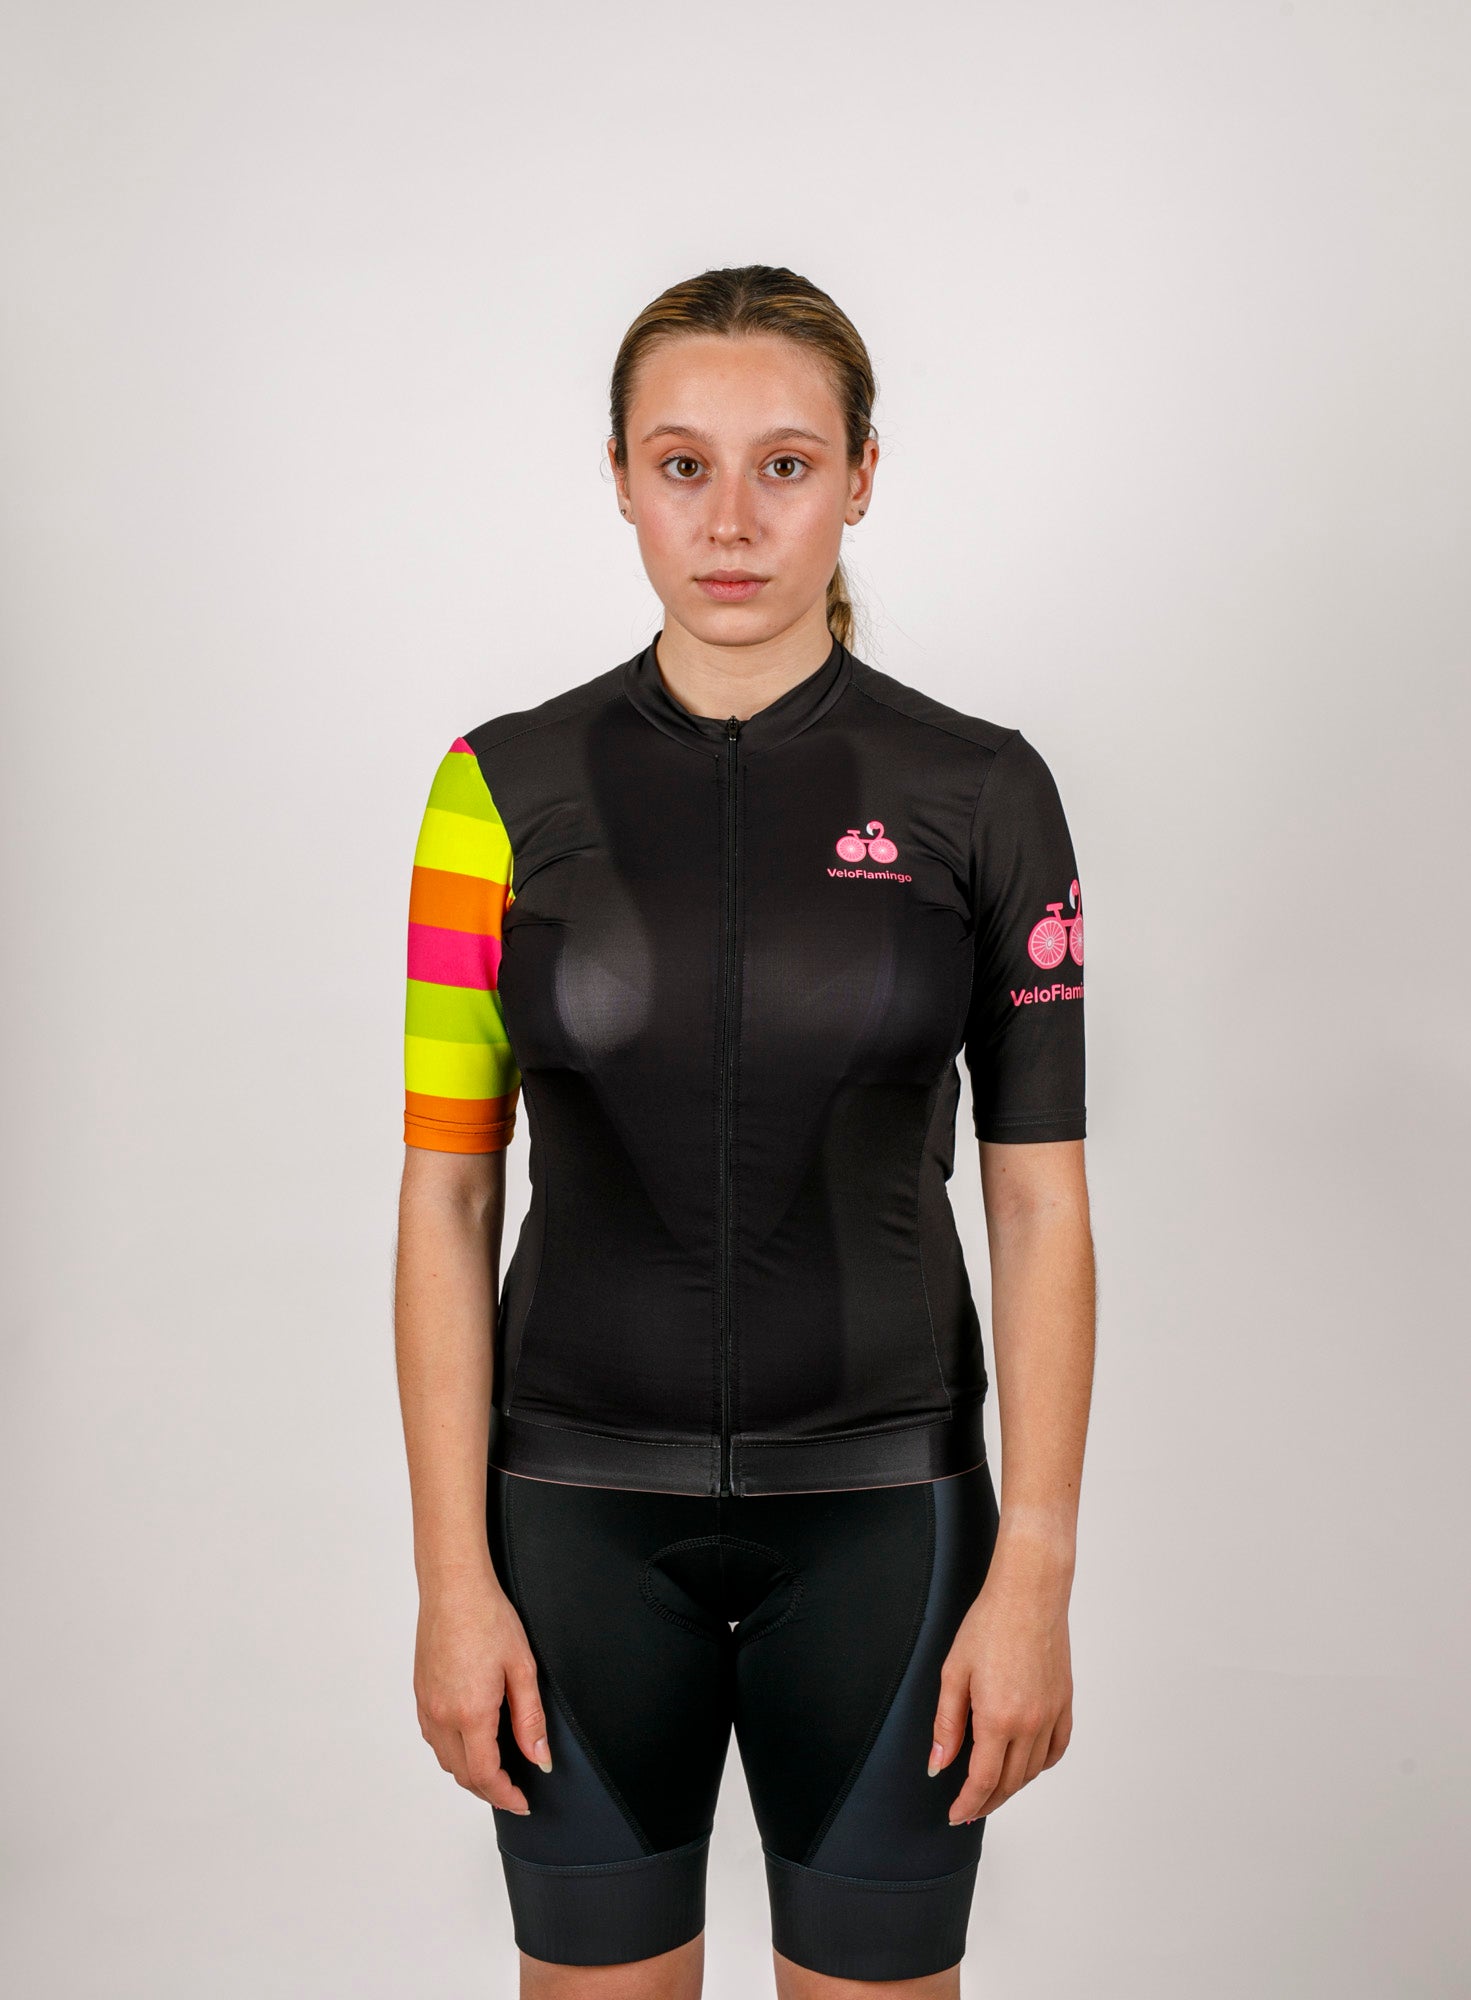 NeonVelo Women's Cycling Jersey